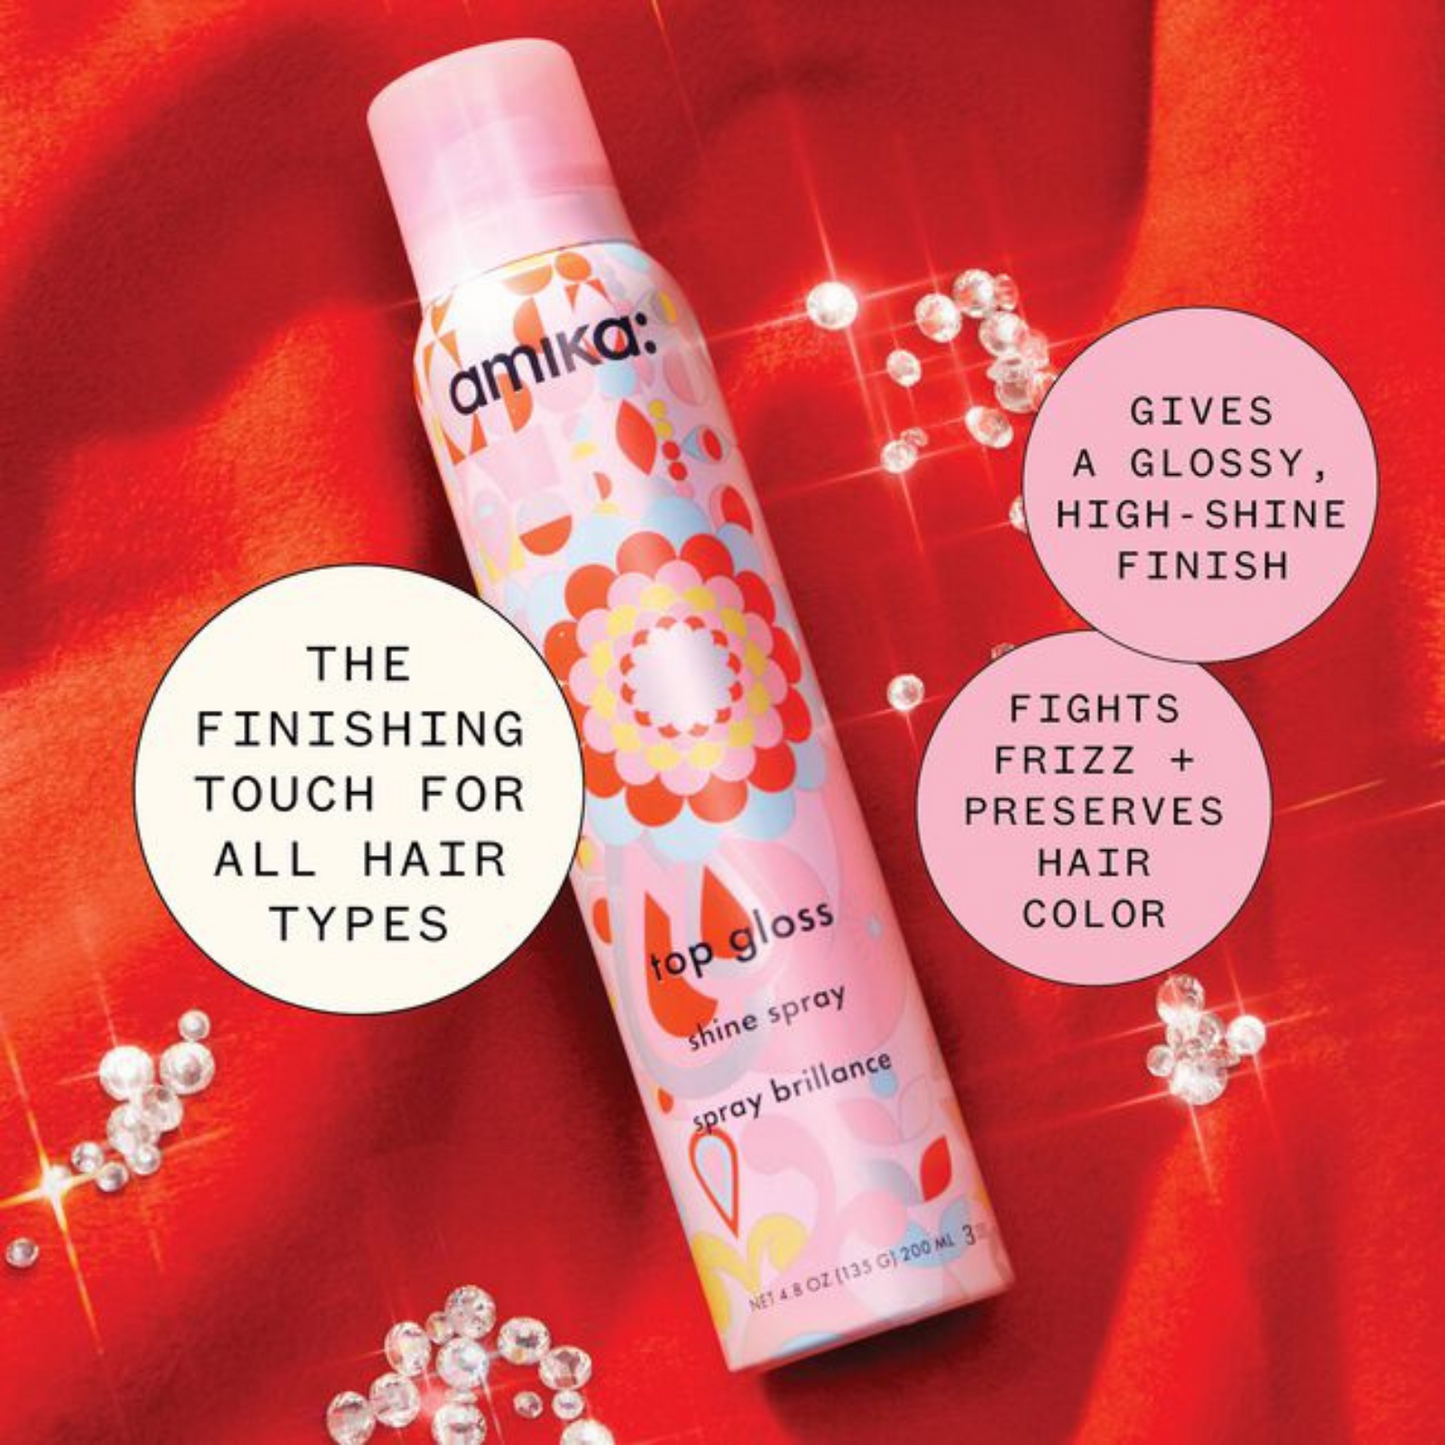 amika - Top Gloss Shine Spray